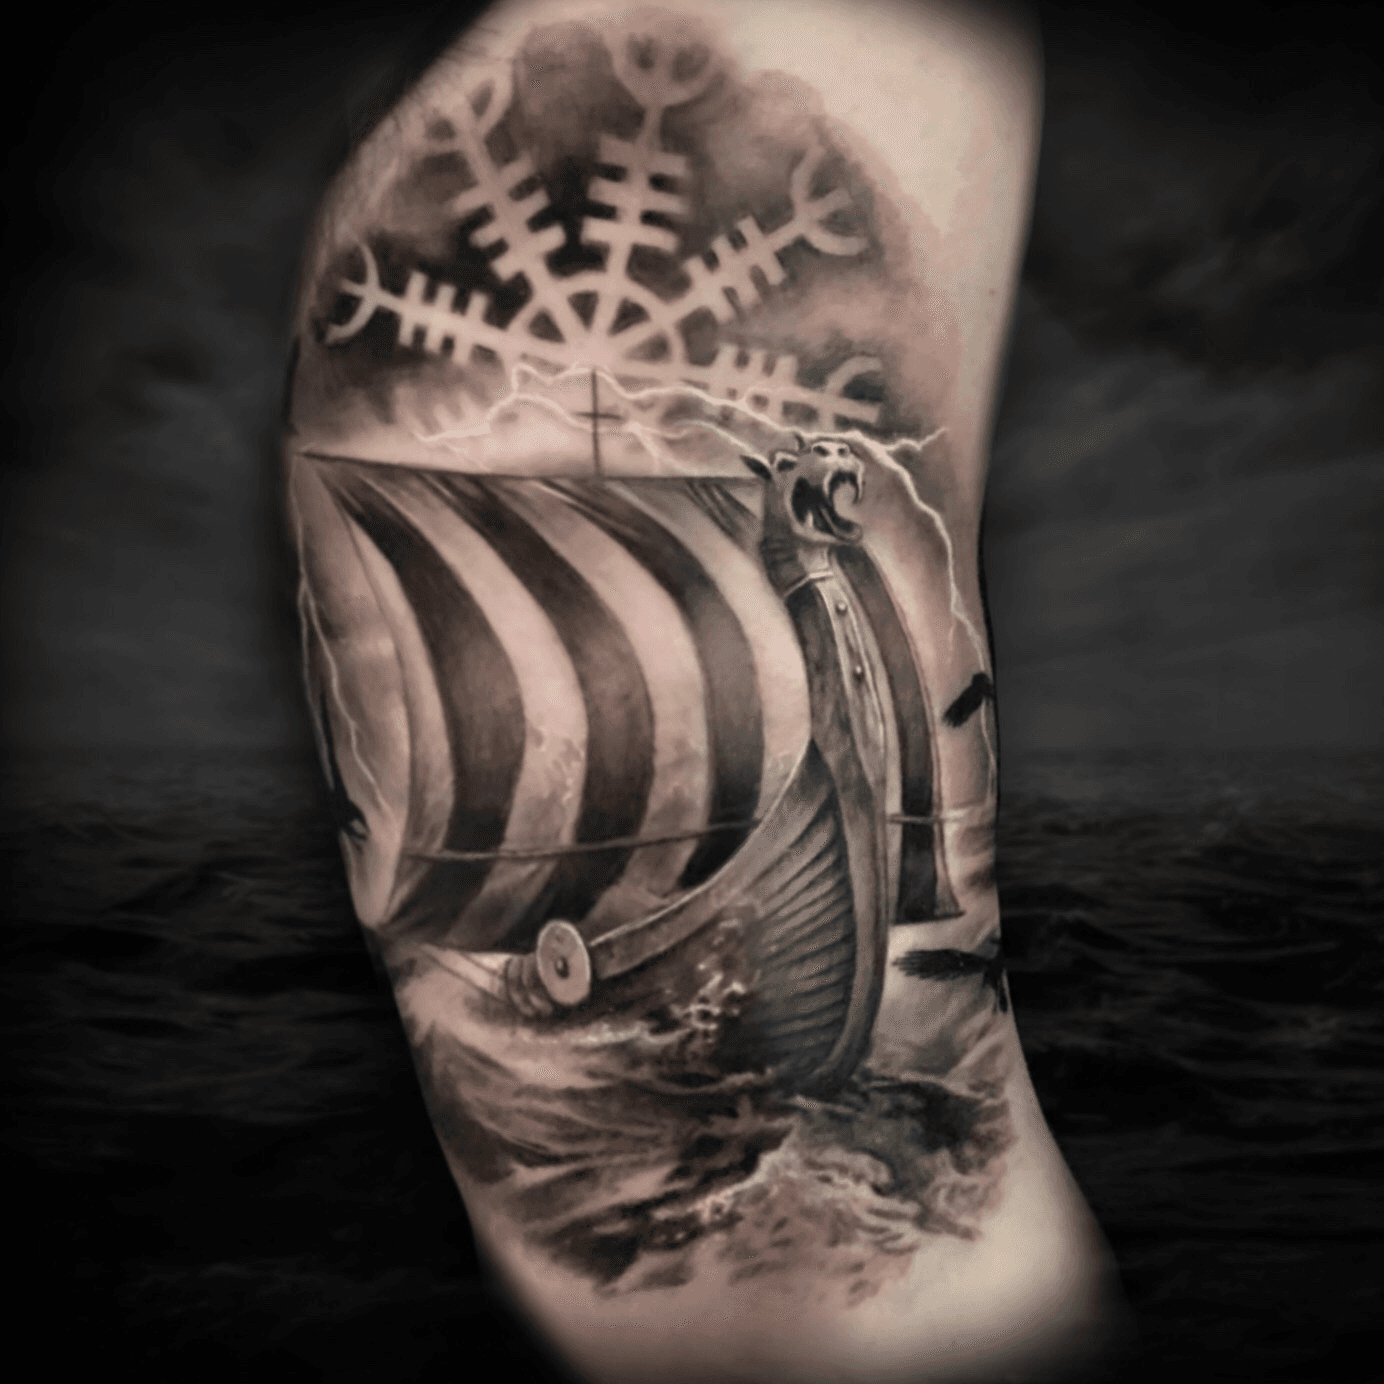 Viking ship tattoo on the inner arm